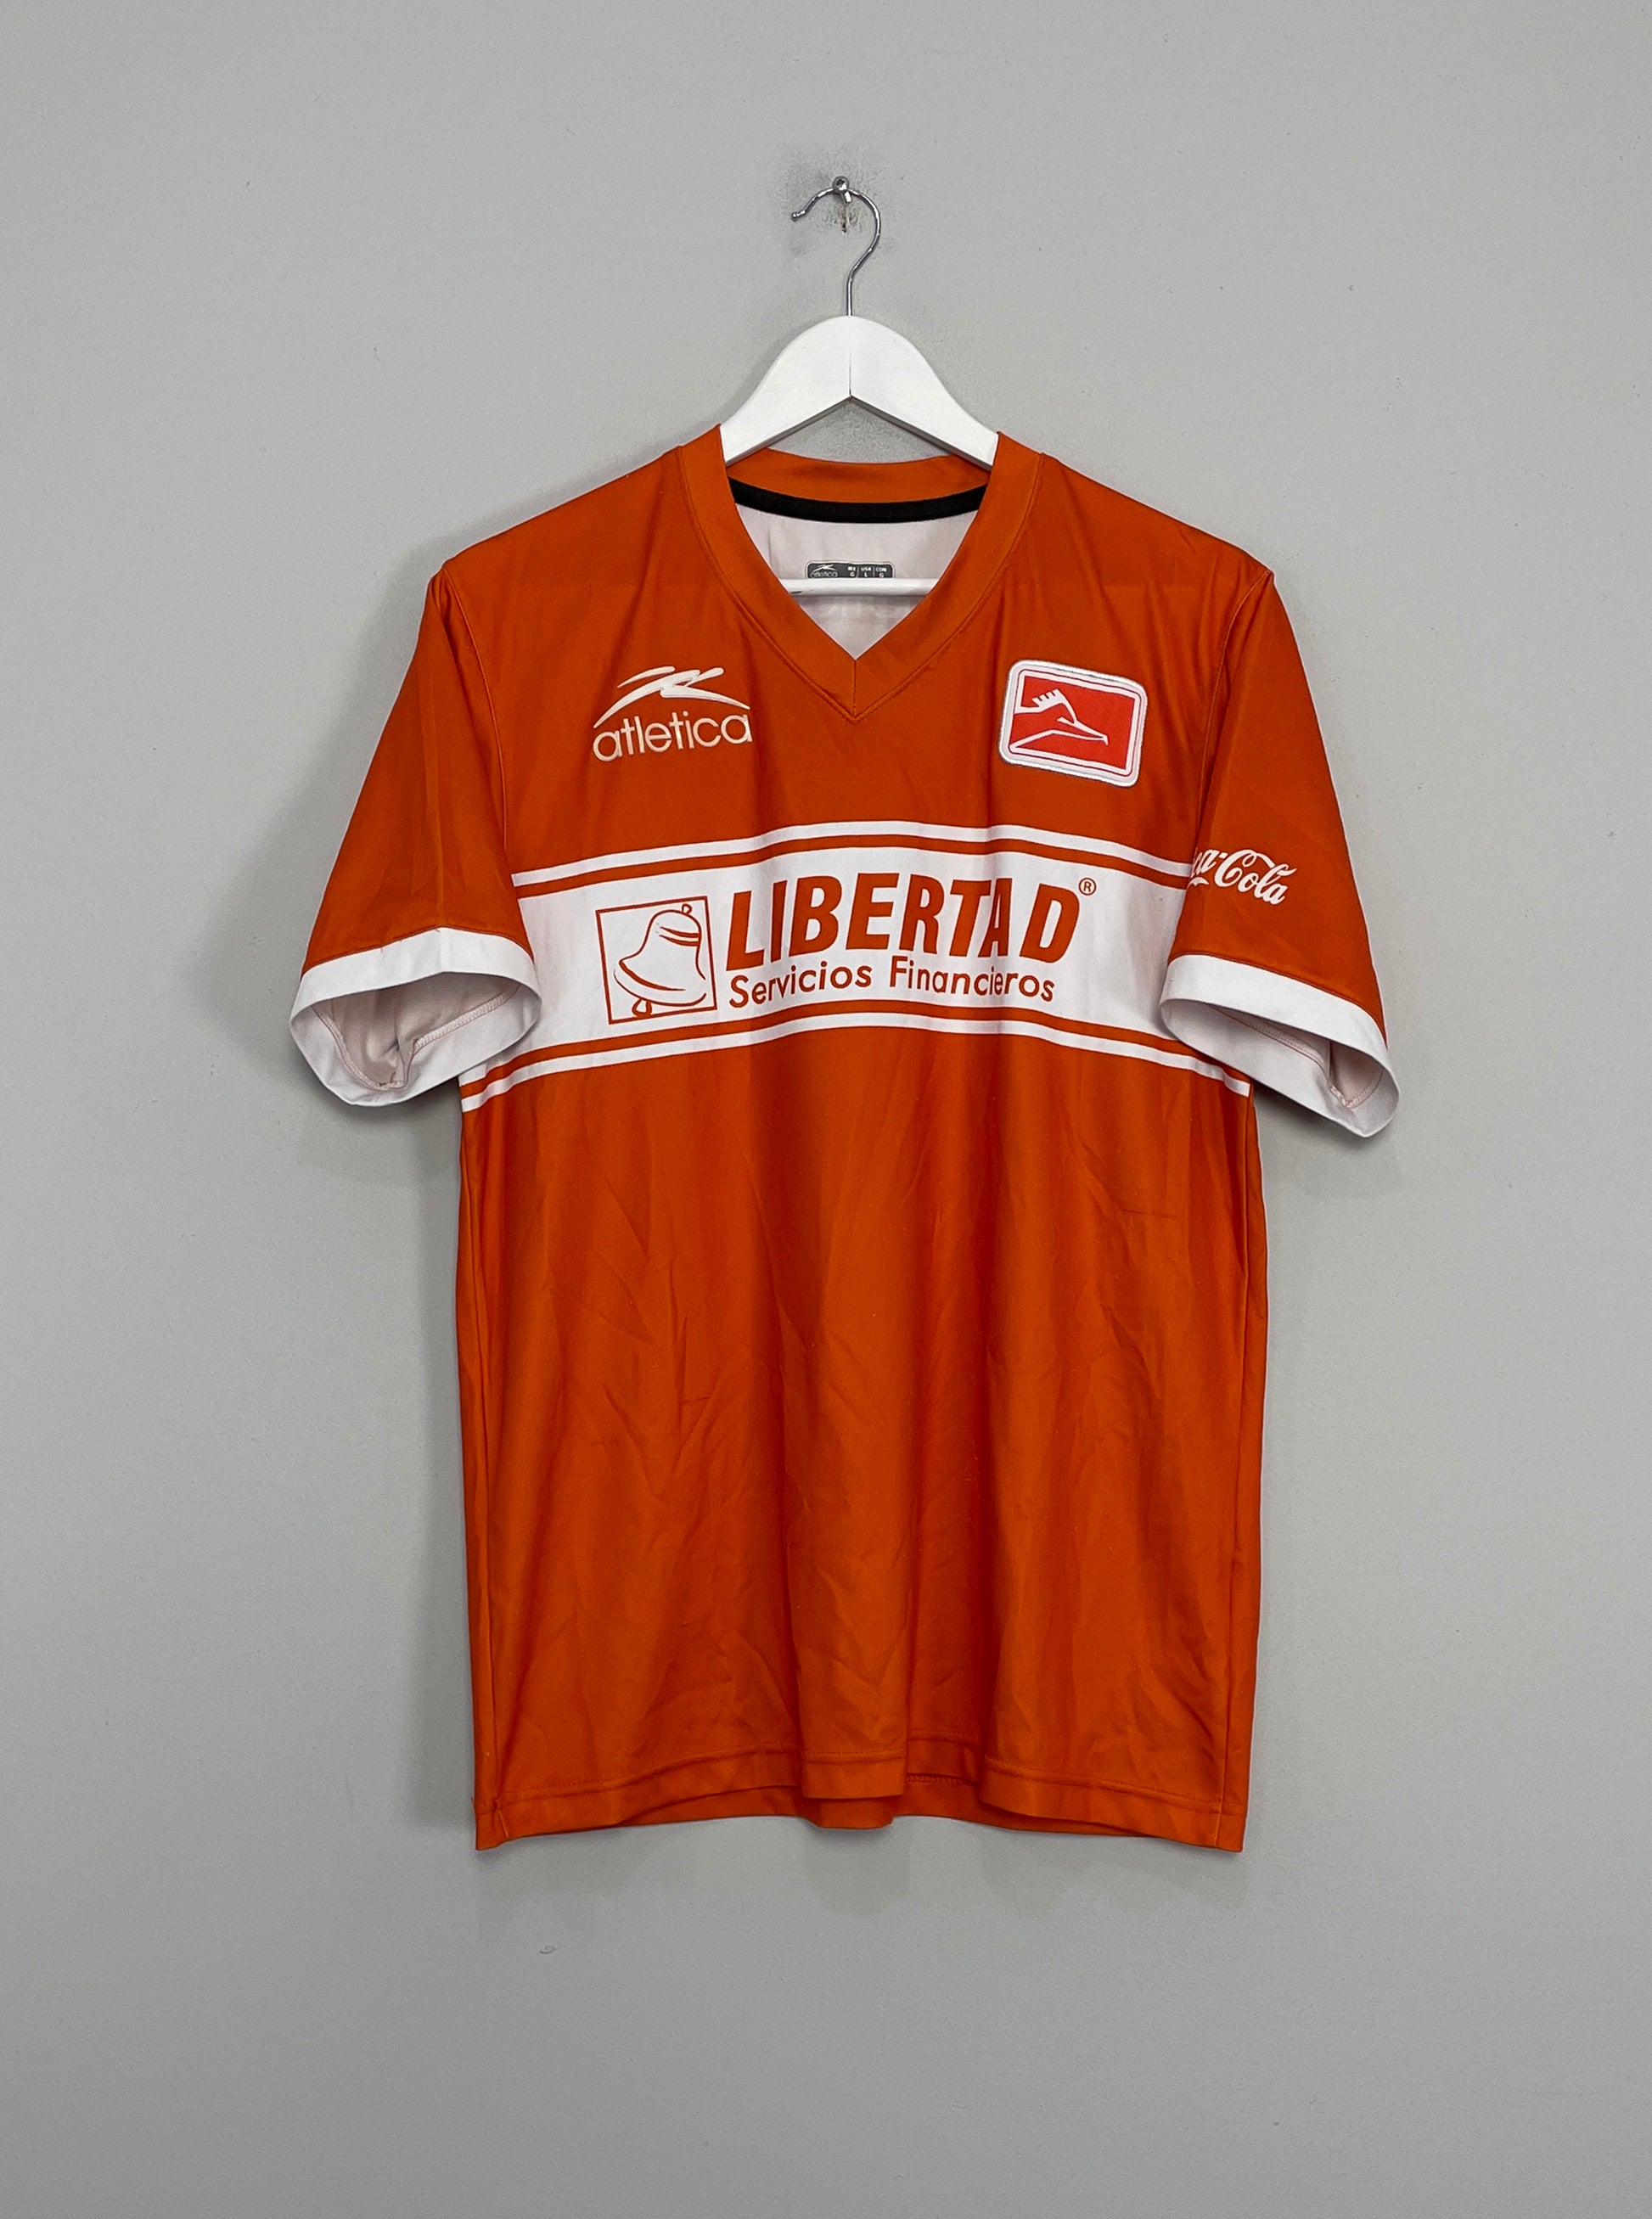 Image of the Correcaminos FC shirt from the 2012/13 season